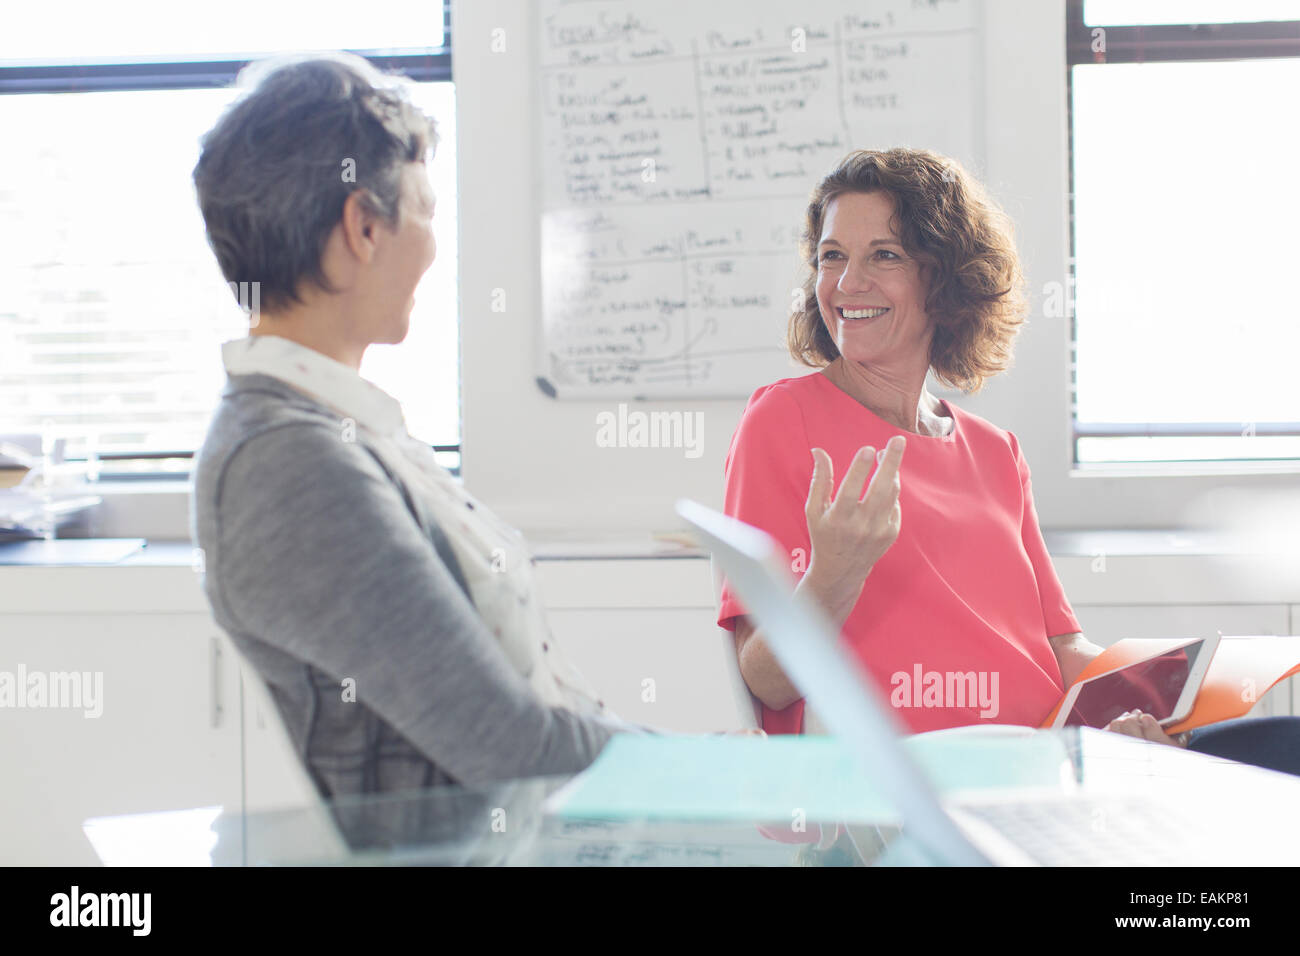 Two smiling women talking in office, whiteboard in background Stock Photo